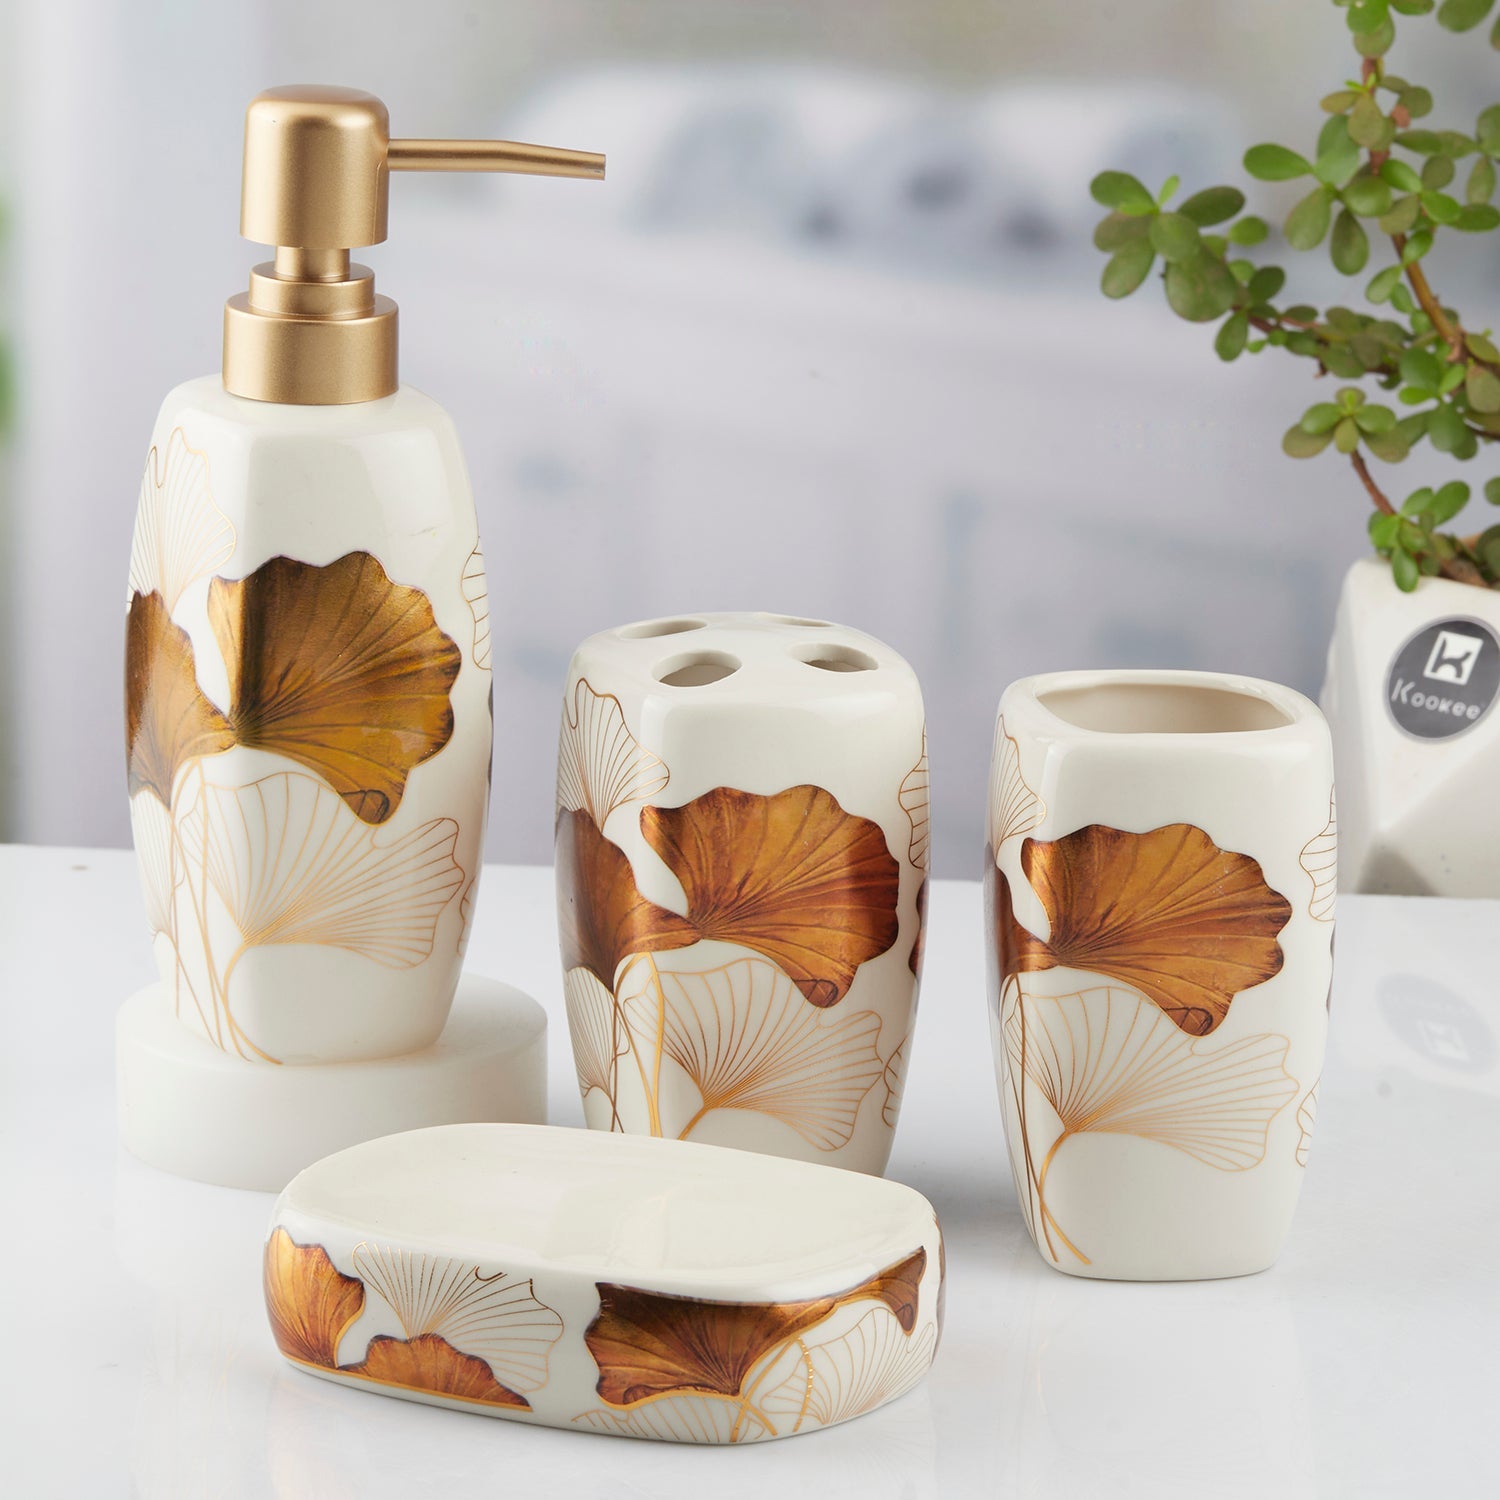 Ceramic Bathroom Set of 4 with Soap Dispenser (10397)